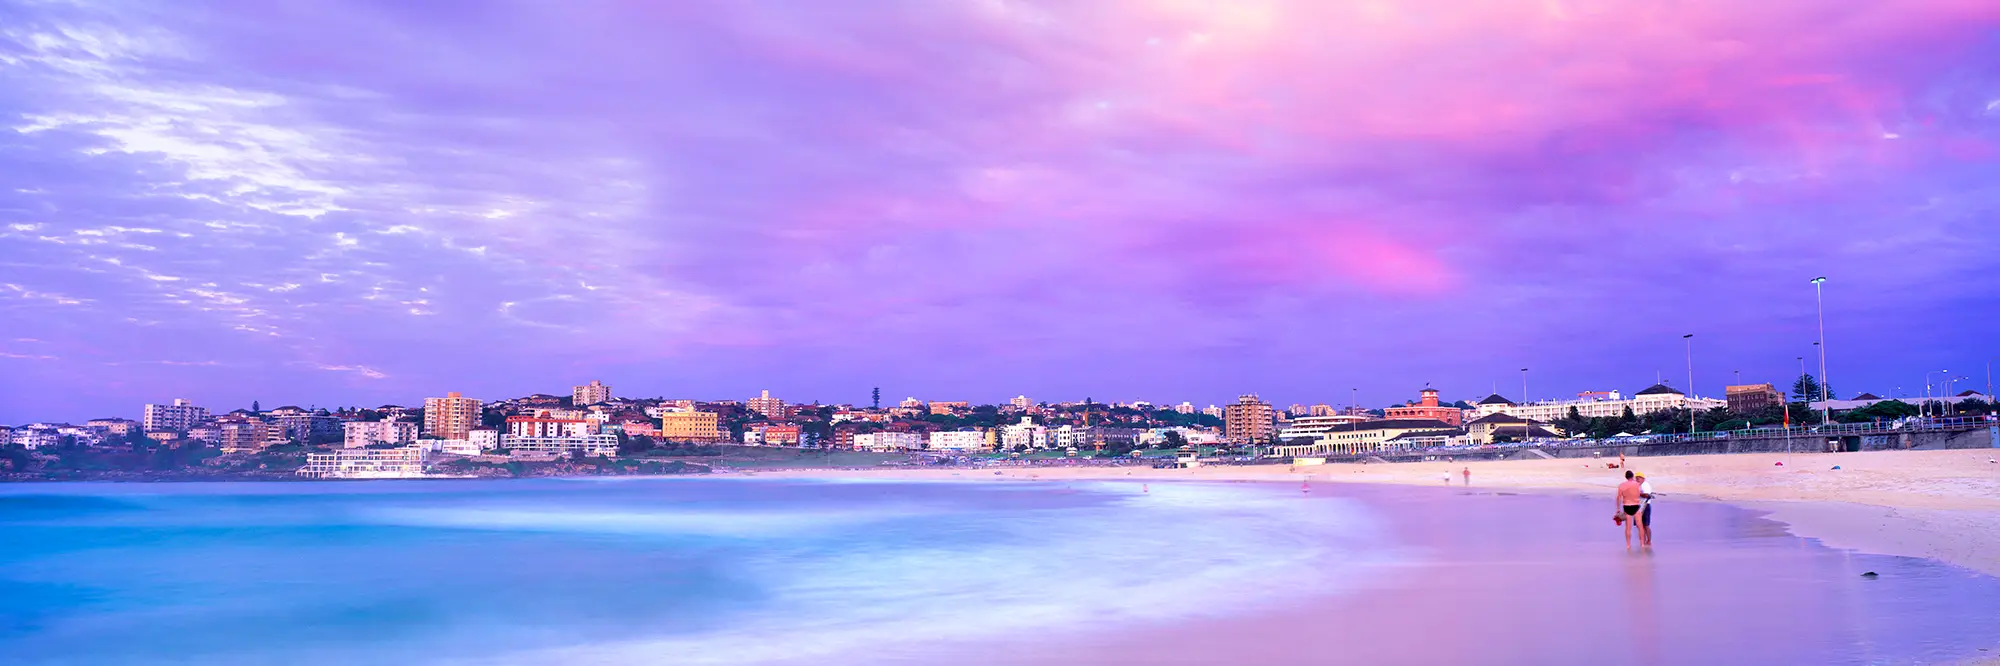 Bondi Beach Pink Sunrise Panoramic Landscape Images